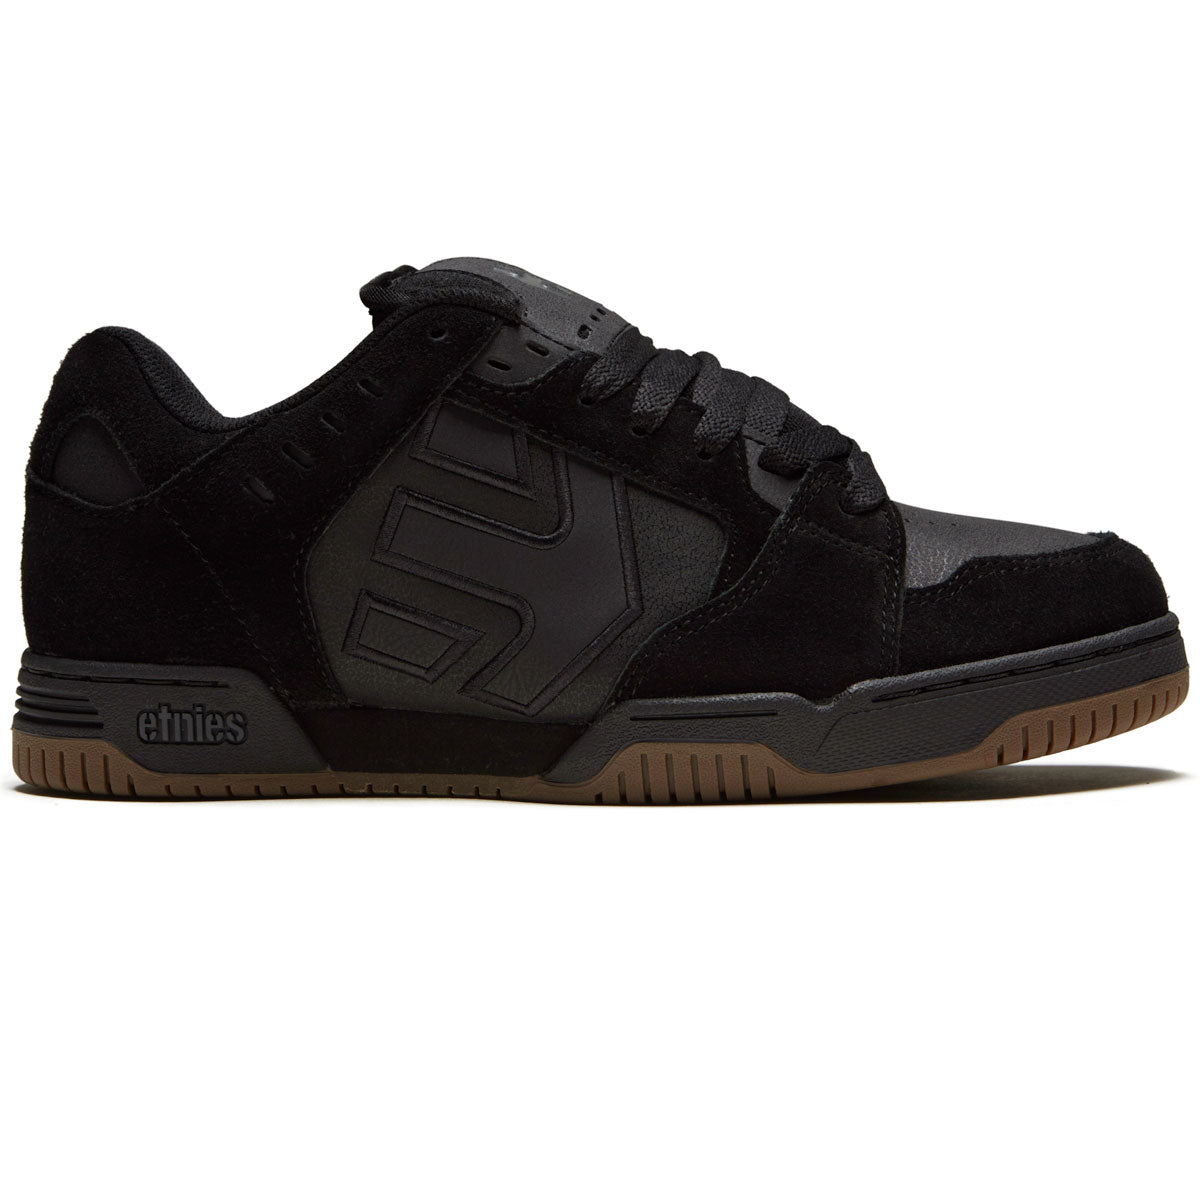 Etnies Faze Shoes - Black/Black/Gum image 1